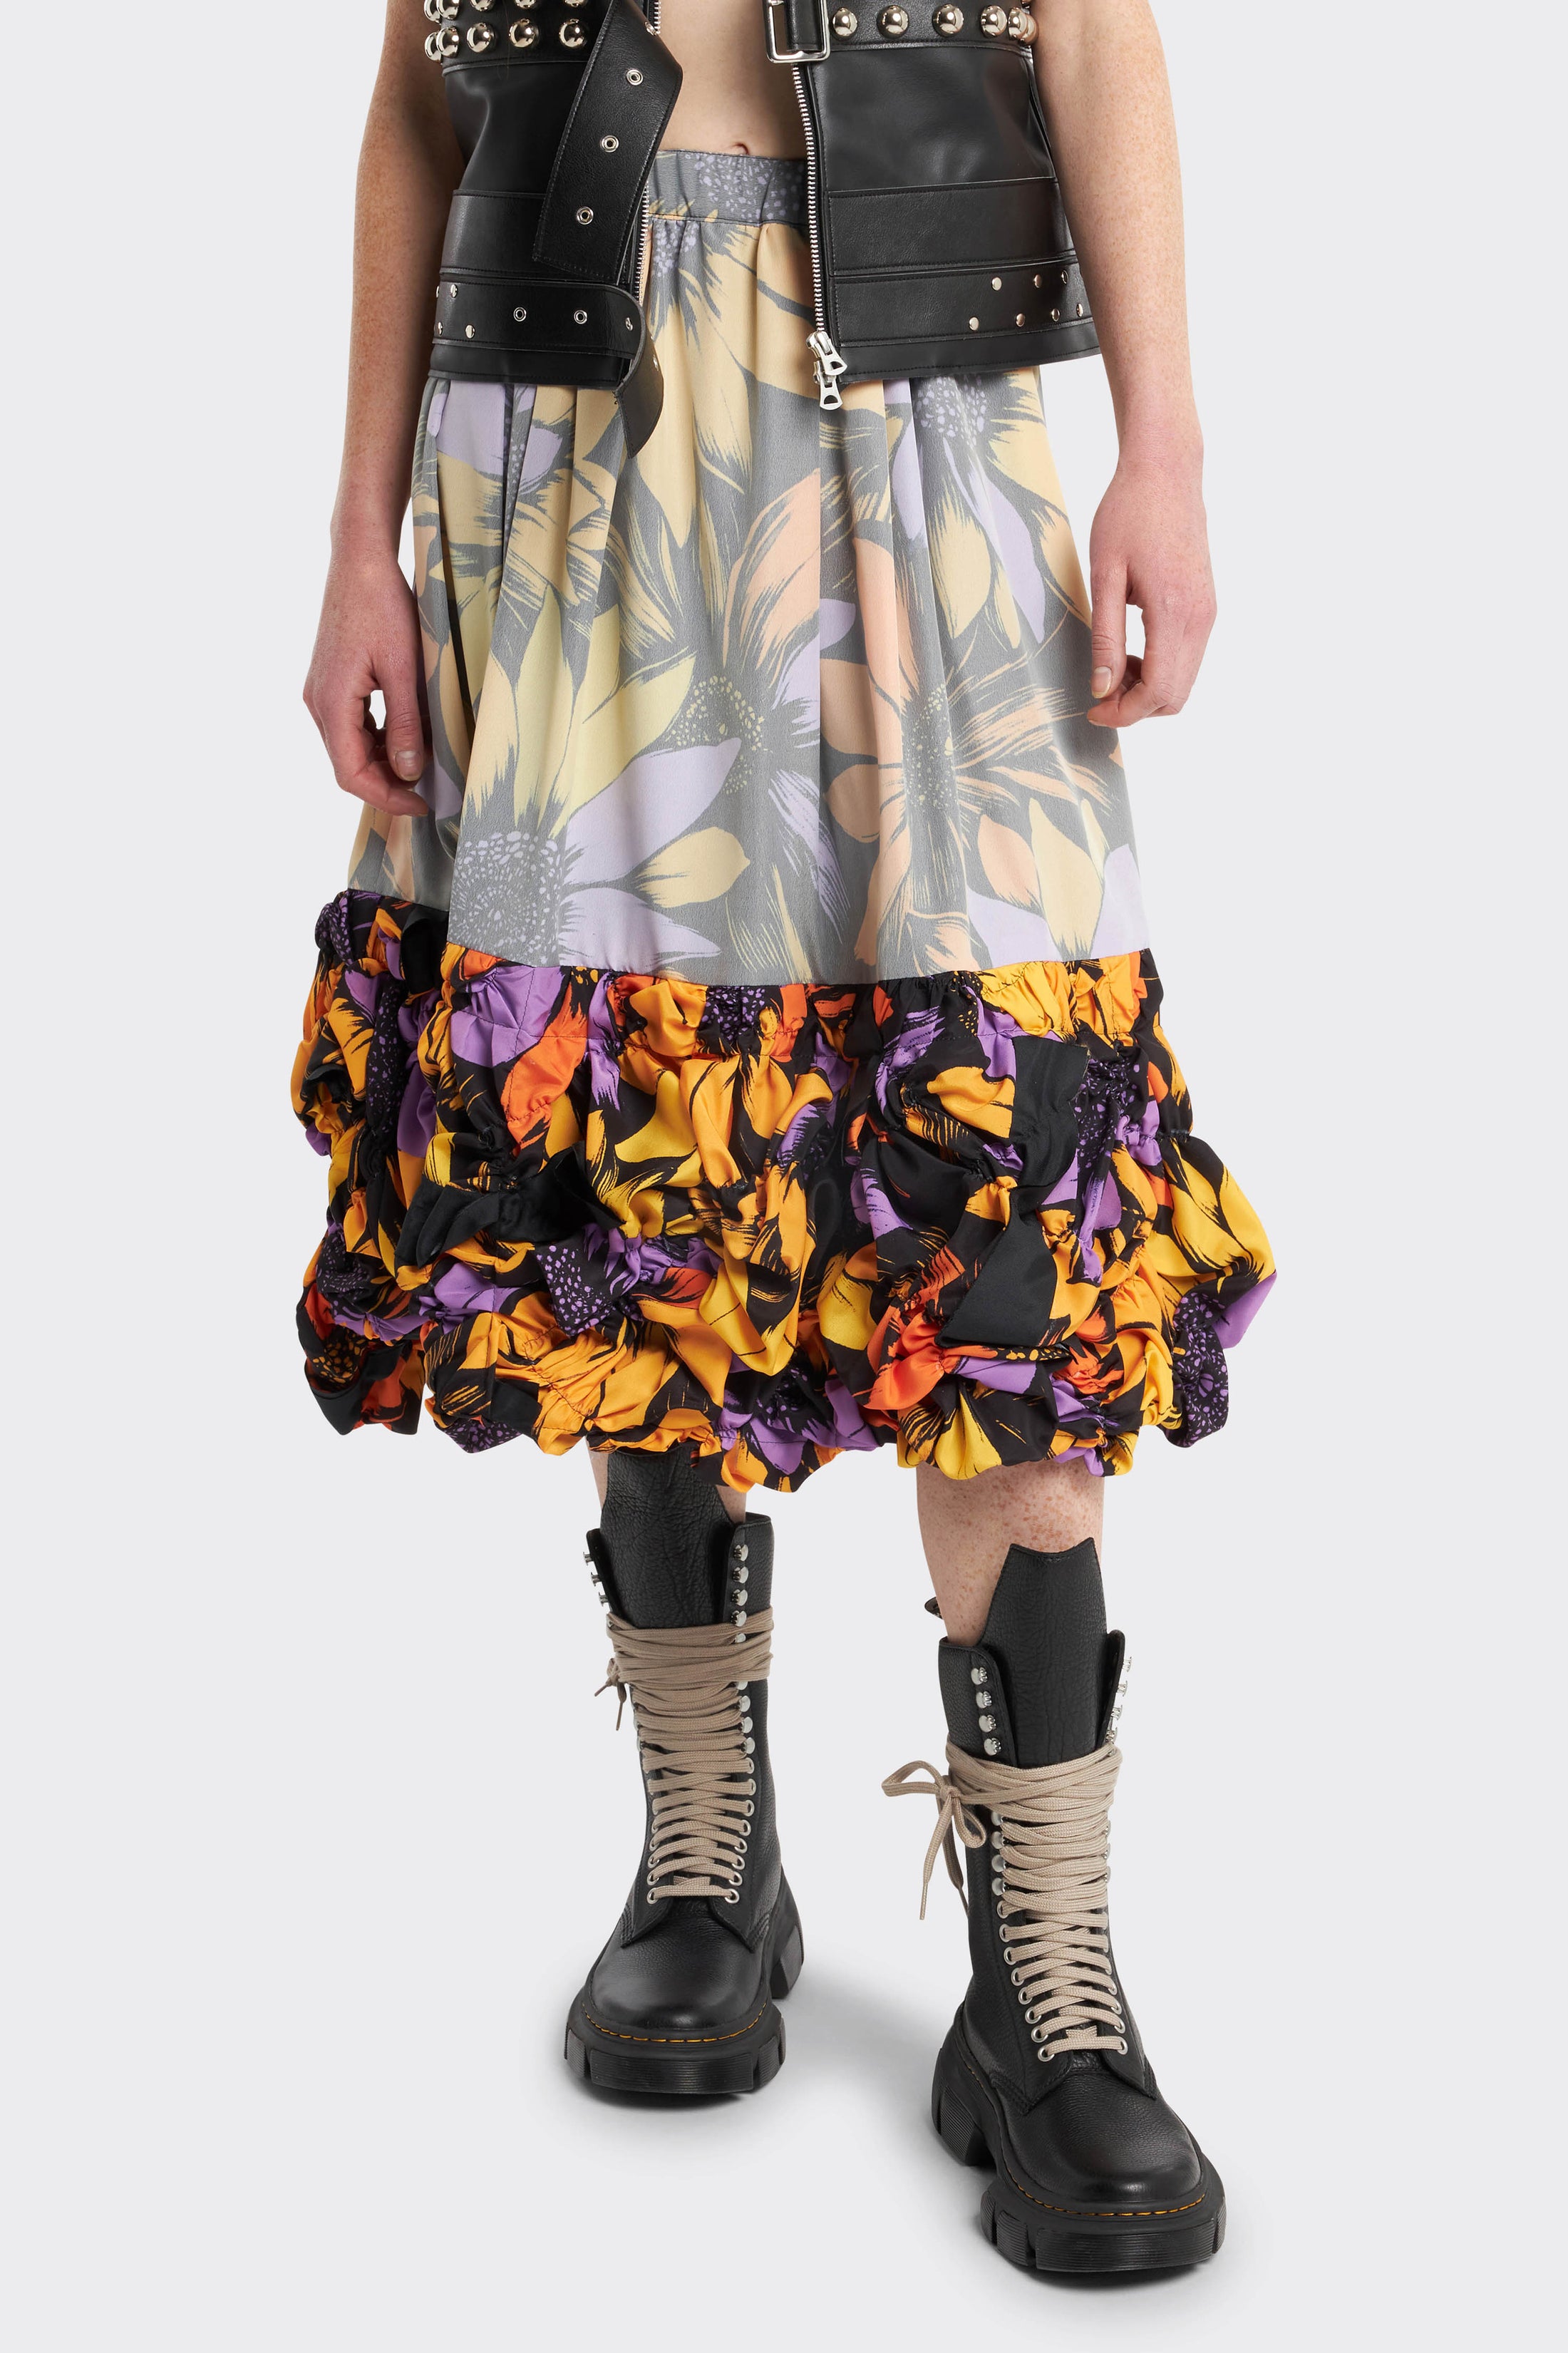 Printed Long Skirt